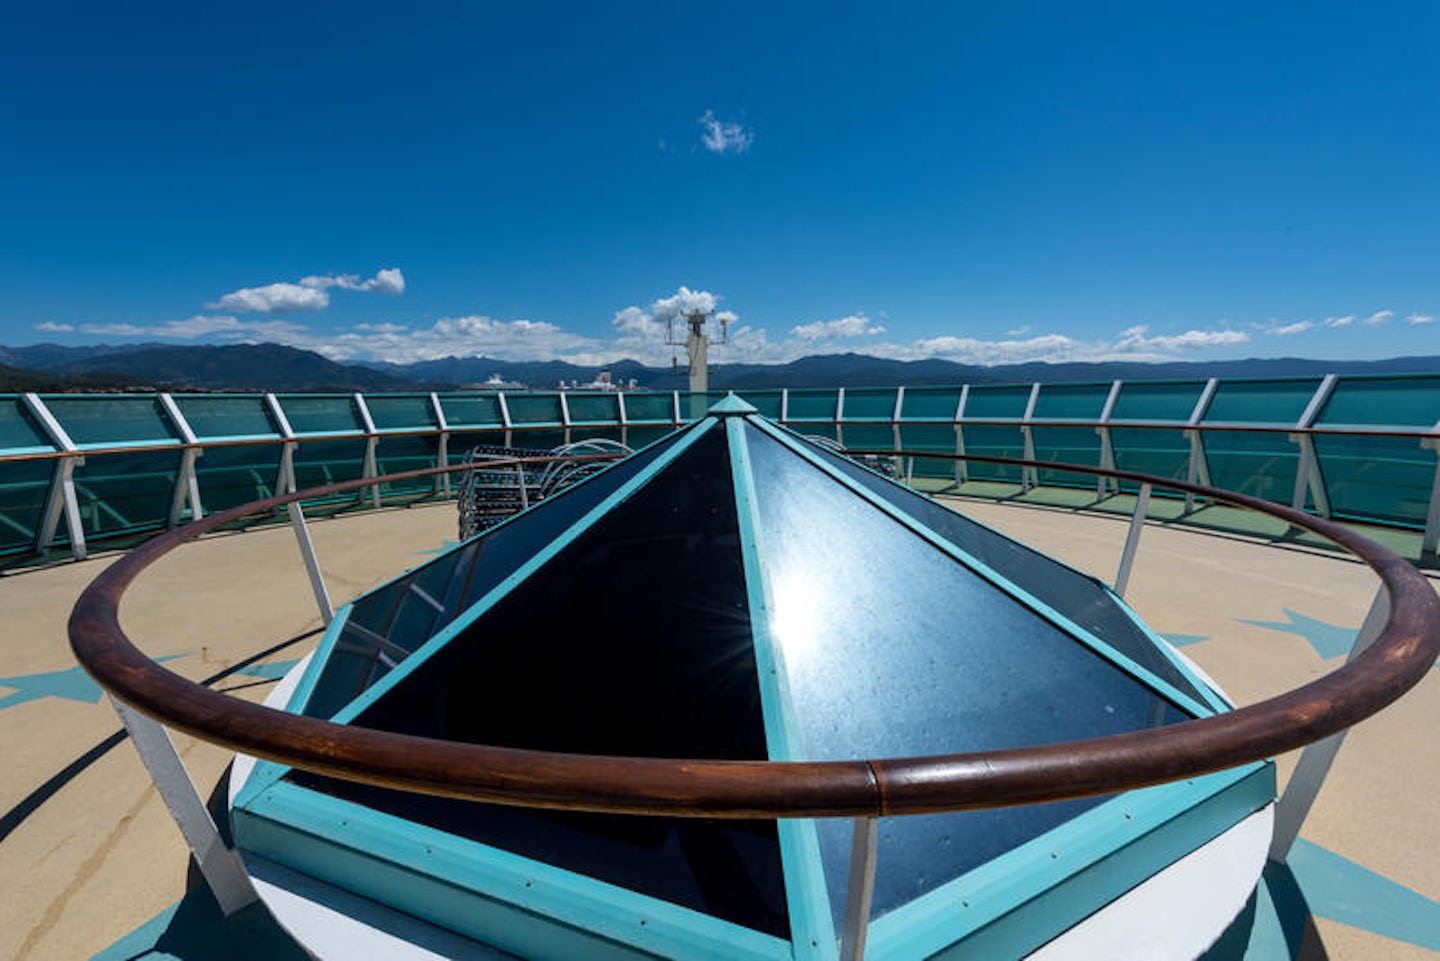 The Sky Deck on Rhapsody of the Seas